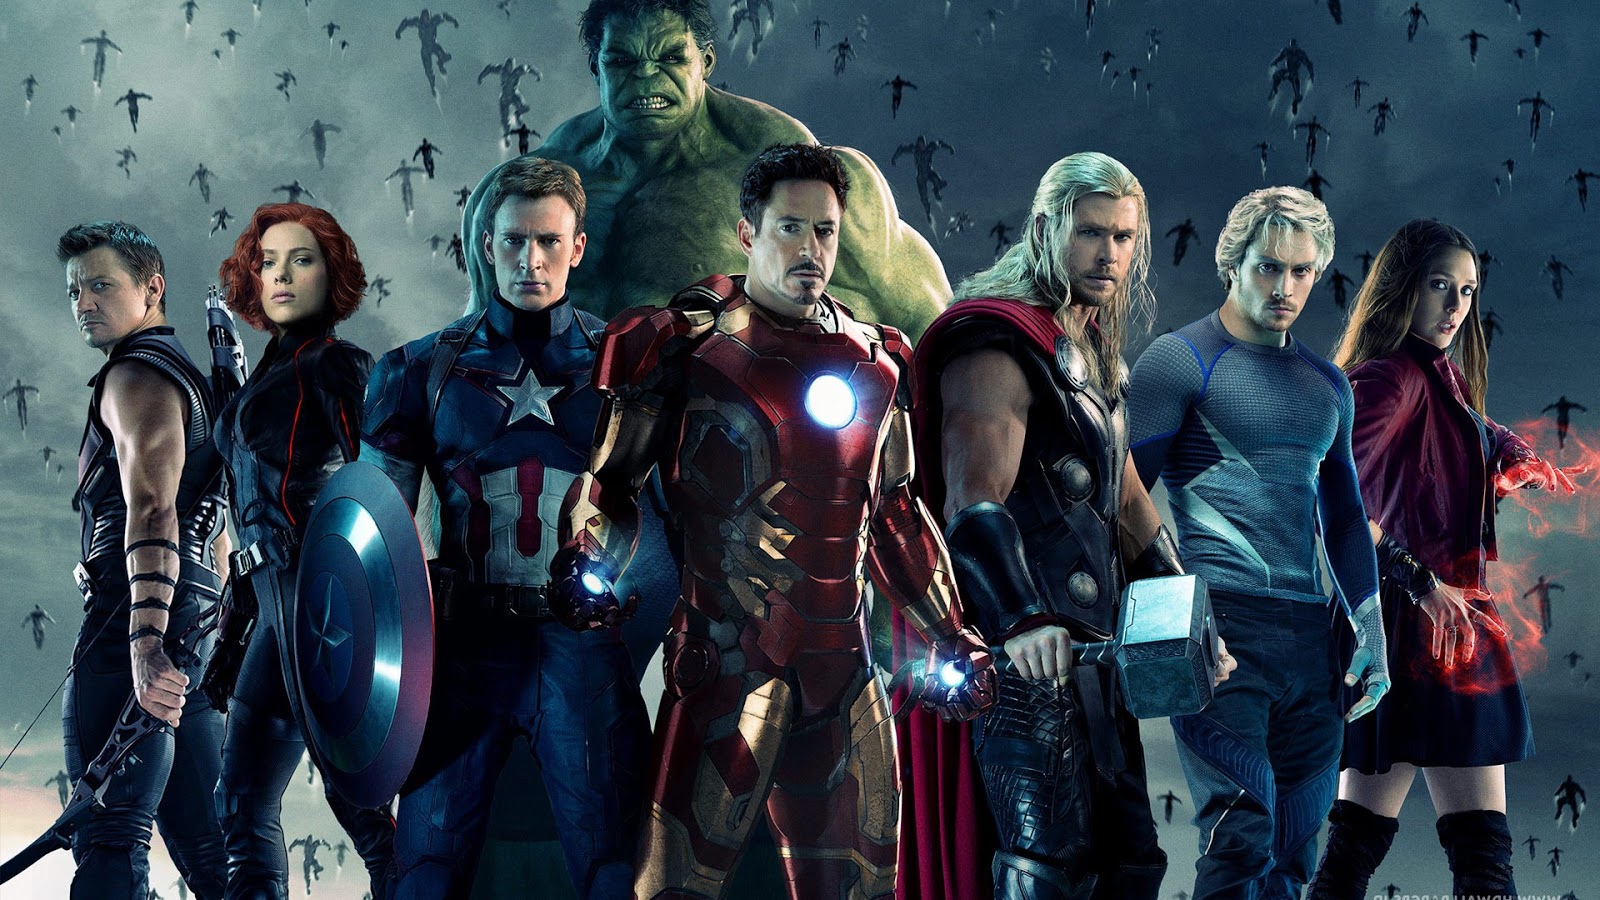 Avengers: Age Of Ultron Full Movie In Hindi 720p Download Movies berilkalasw Free%2Bdownload%2Bbluray%2B1080p%2B720p%2Bmovie%2Bgoogle%2Bdrive%2BAvengers%2BAge%2Bof%2BUltron%252C%2BUSA%252C%2B2015%252C%2BJoss%2BWhedon%252C%2BRobert%2BDowney%2BJr.%252C%2BChris%2BEvans%252C%2BMark%2BRuffalo%252C%2BChris%2BHemsworth%252C%2BScarlett%2BJohansson%252C%2BJeremy%2BRenner%2B2